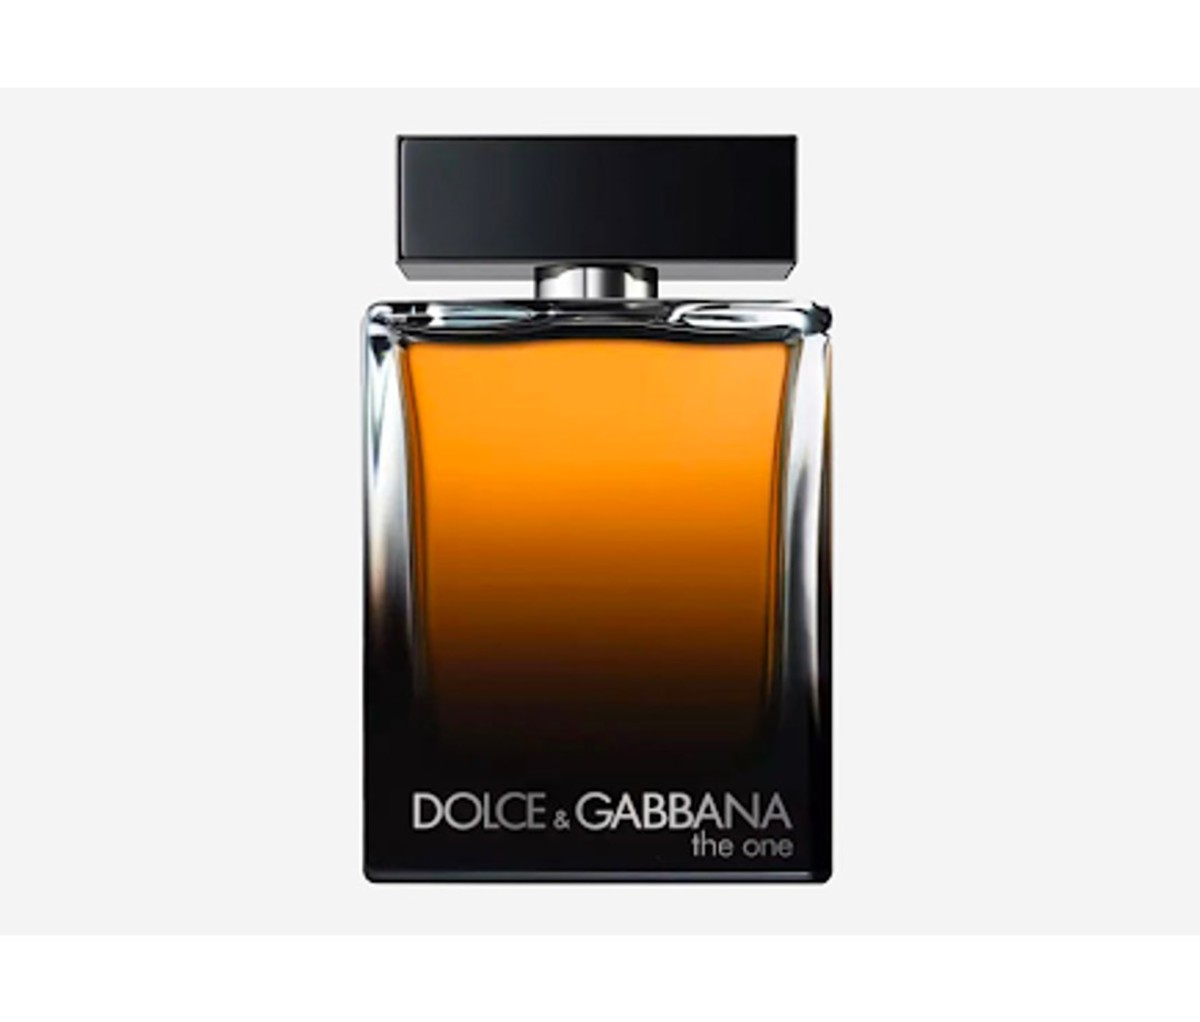 Dolce & Gabbana’s The One